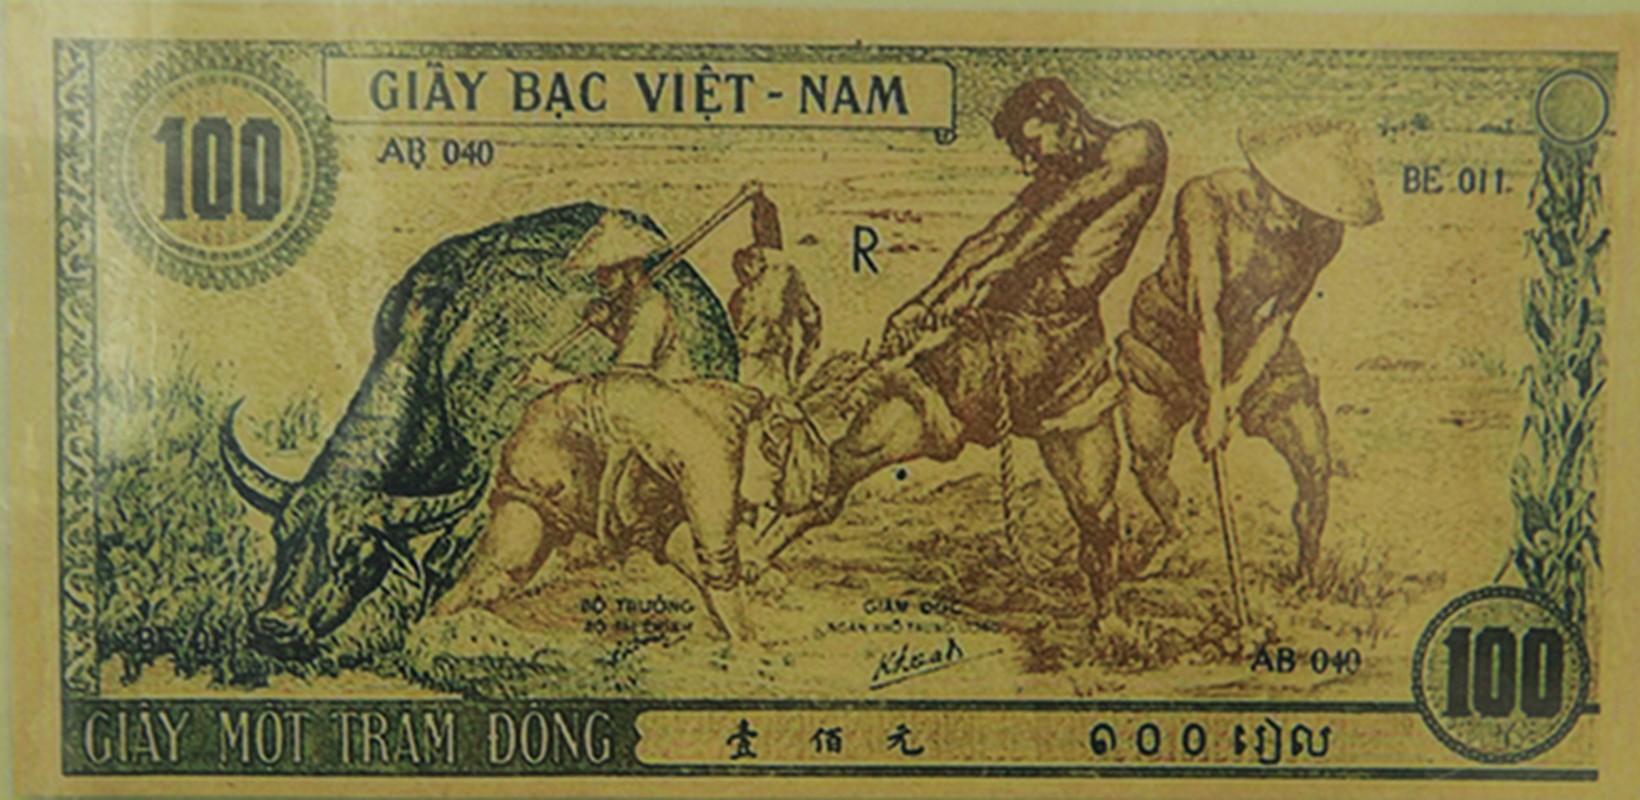 Chuyen it biet ve nha may in tien dau tien cua Viet Nam-Hinh-7